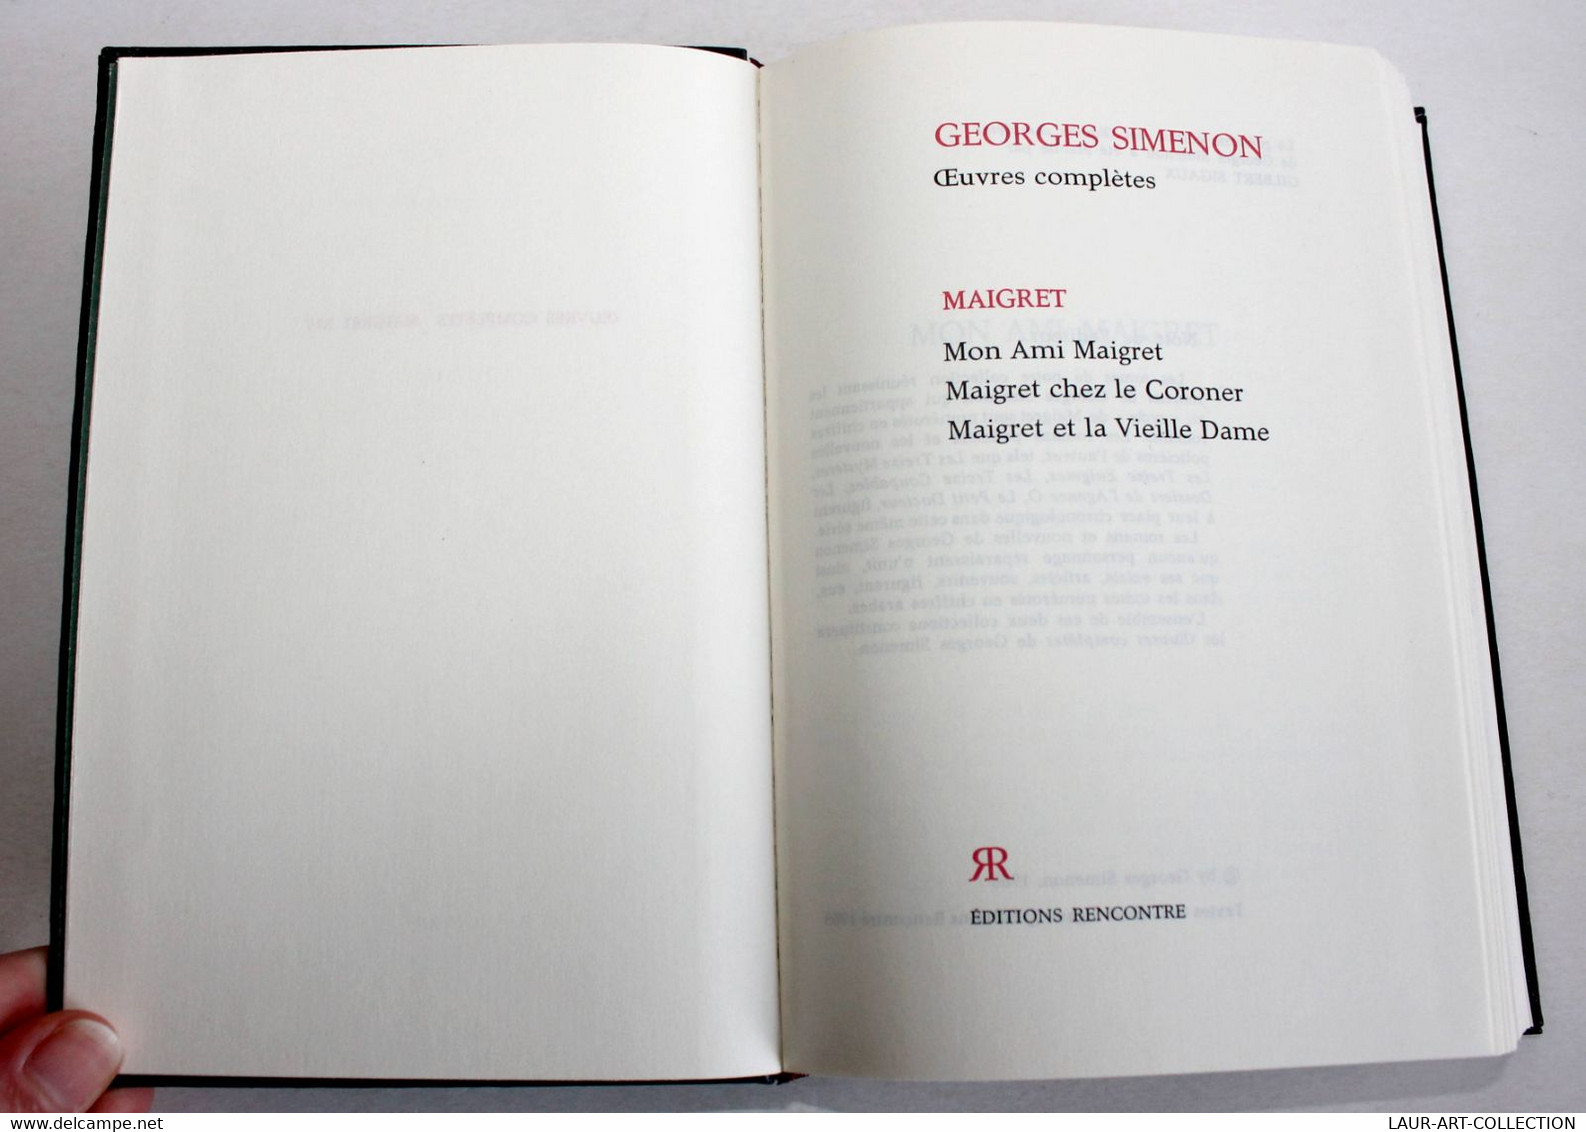 GEORGES SIMENON - OEUVRES COMPLETES - MAIGRET N°XIV MON AMI MAIGRET CHEZ CORONER / ANCIEN LIVRE DE COLLECTION (2301.241) - Simenon